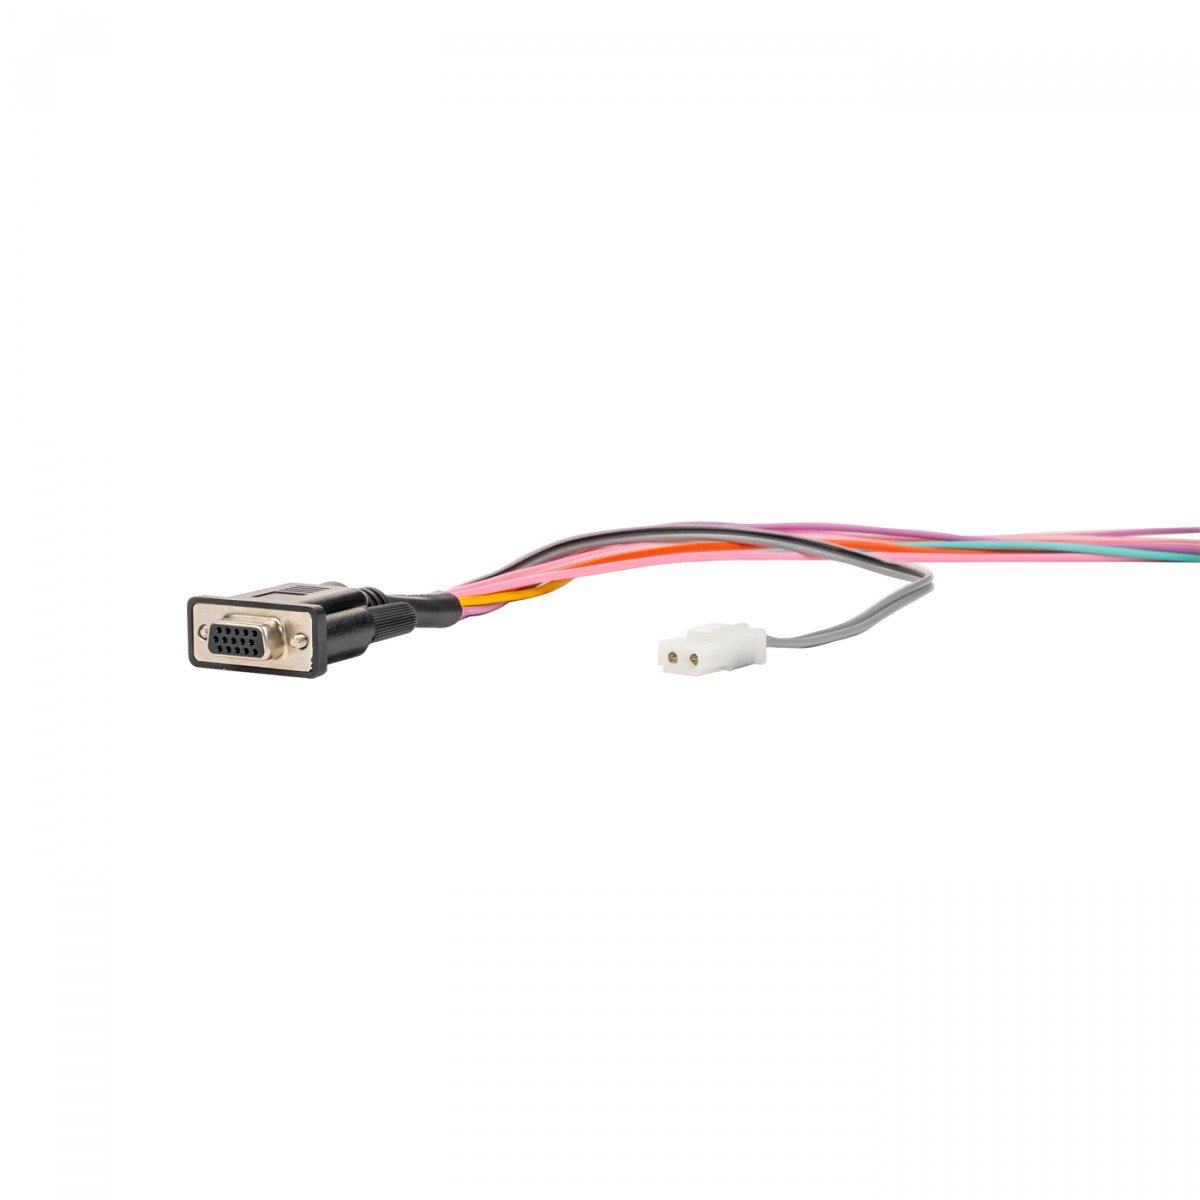 SEPURA speaker2-/ 8 GPIO connection cable for SCG 300-02014